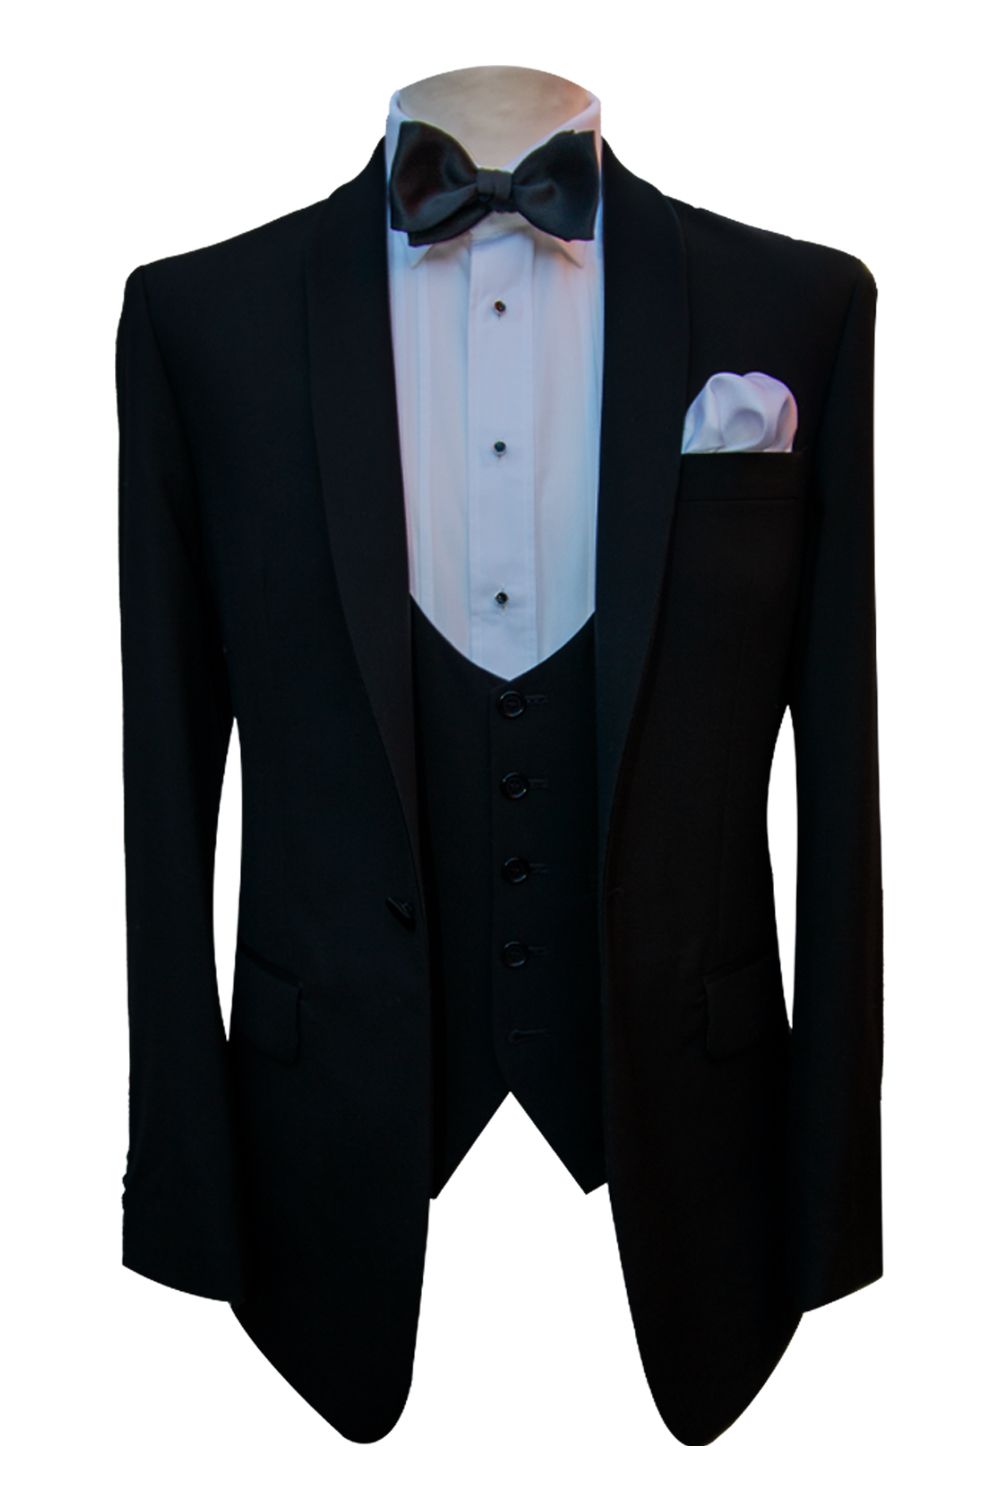 Black Tie Menswear-Image-48